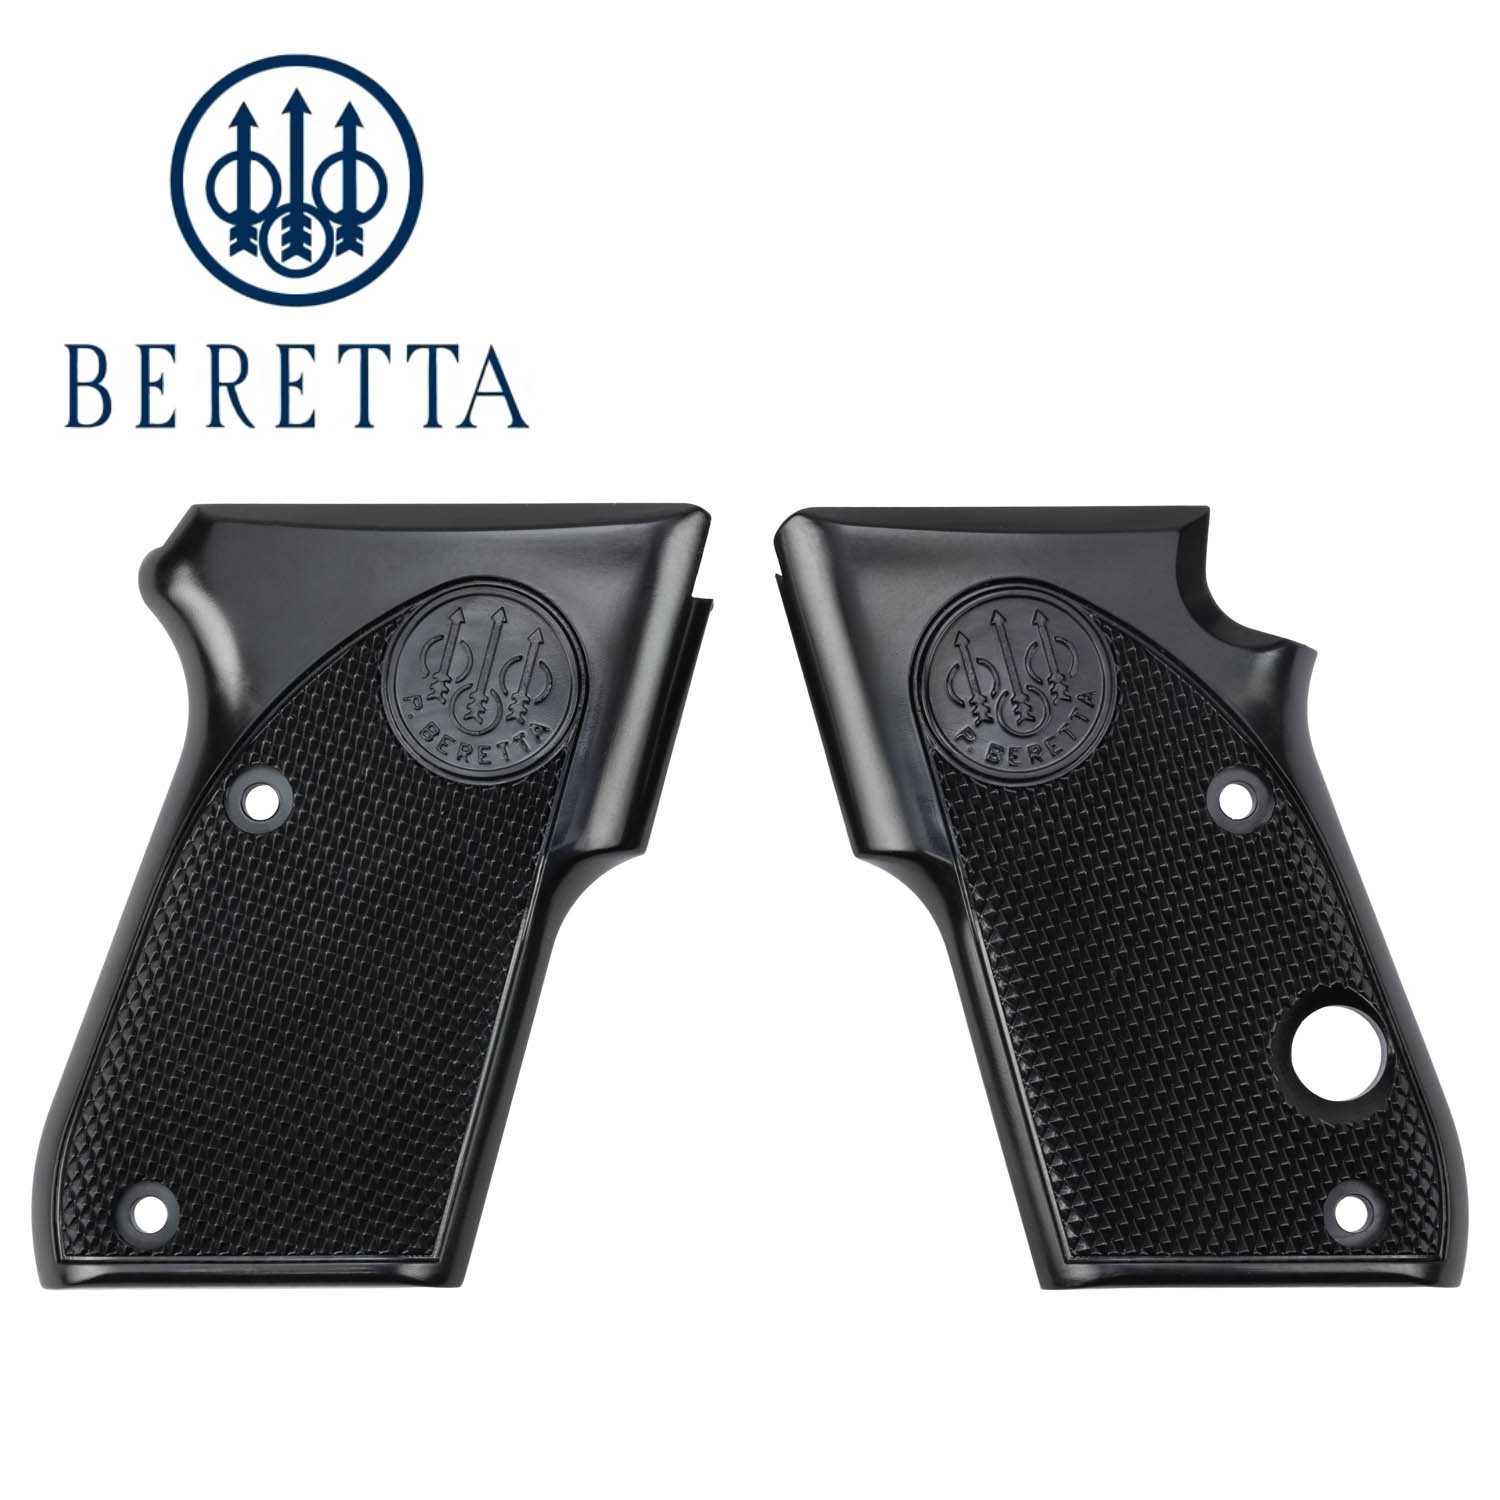 Beretta 21a bobcat for sale